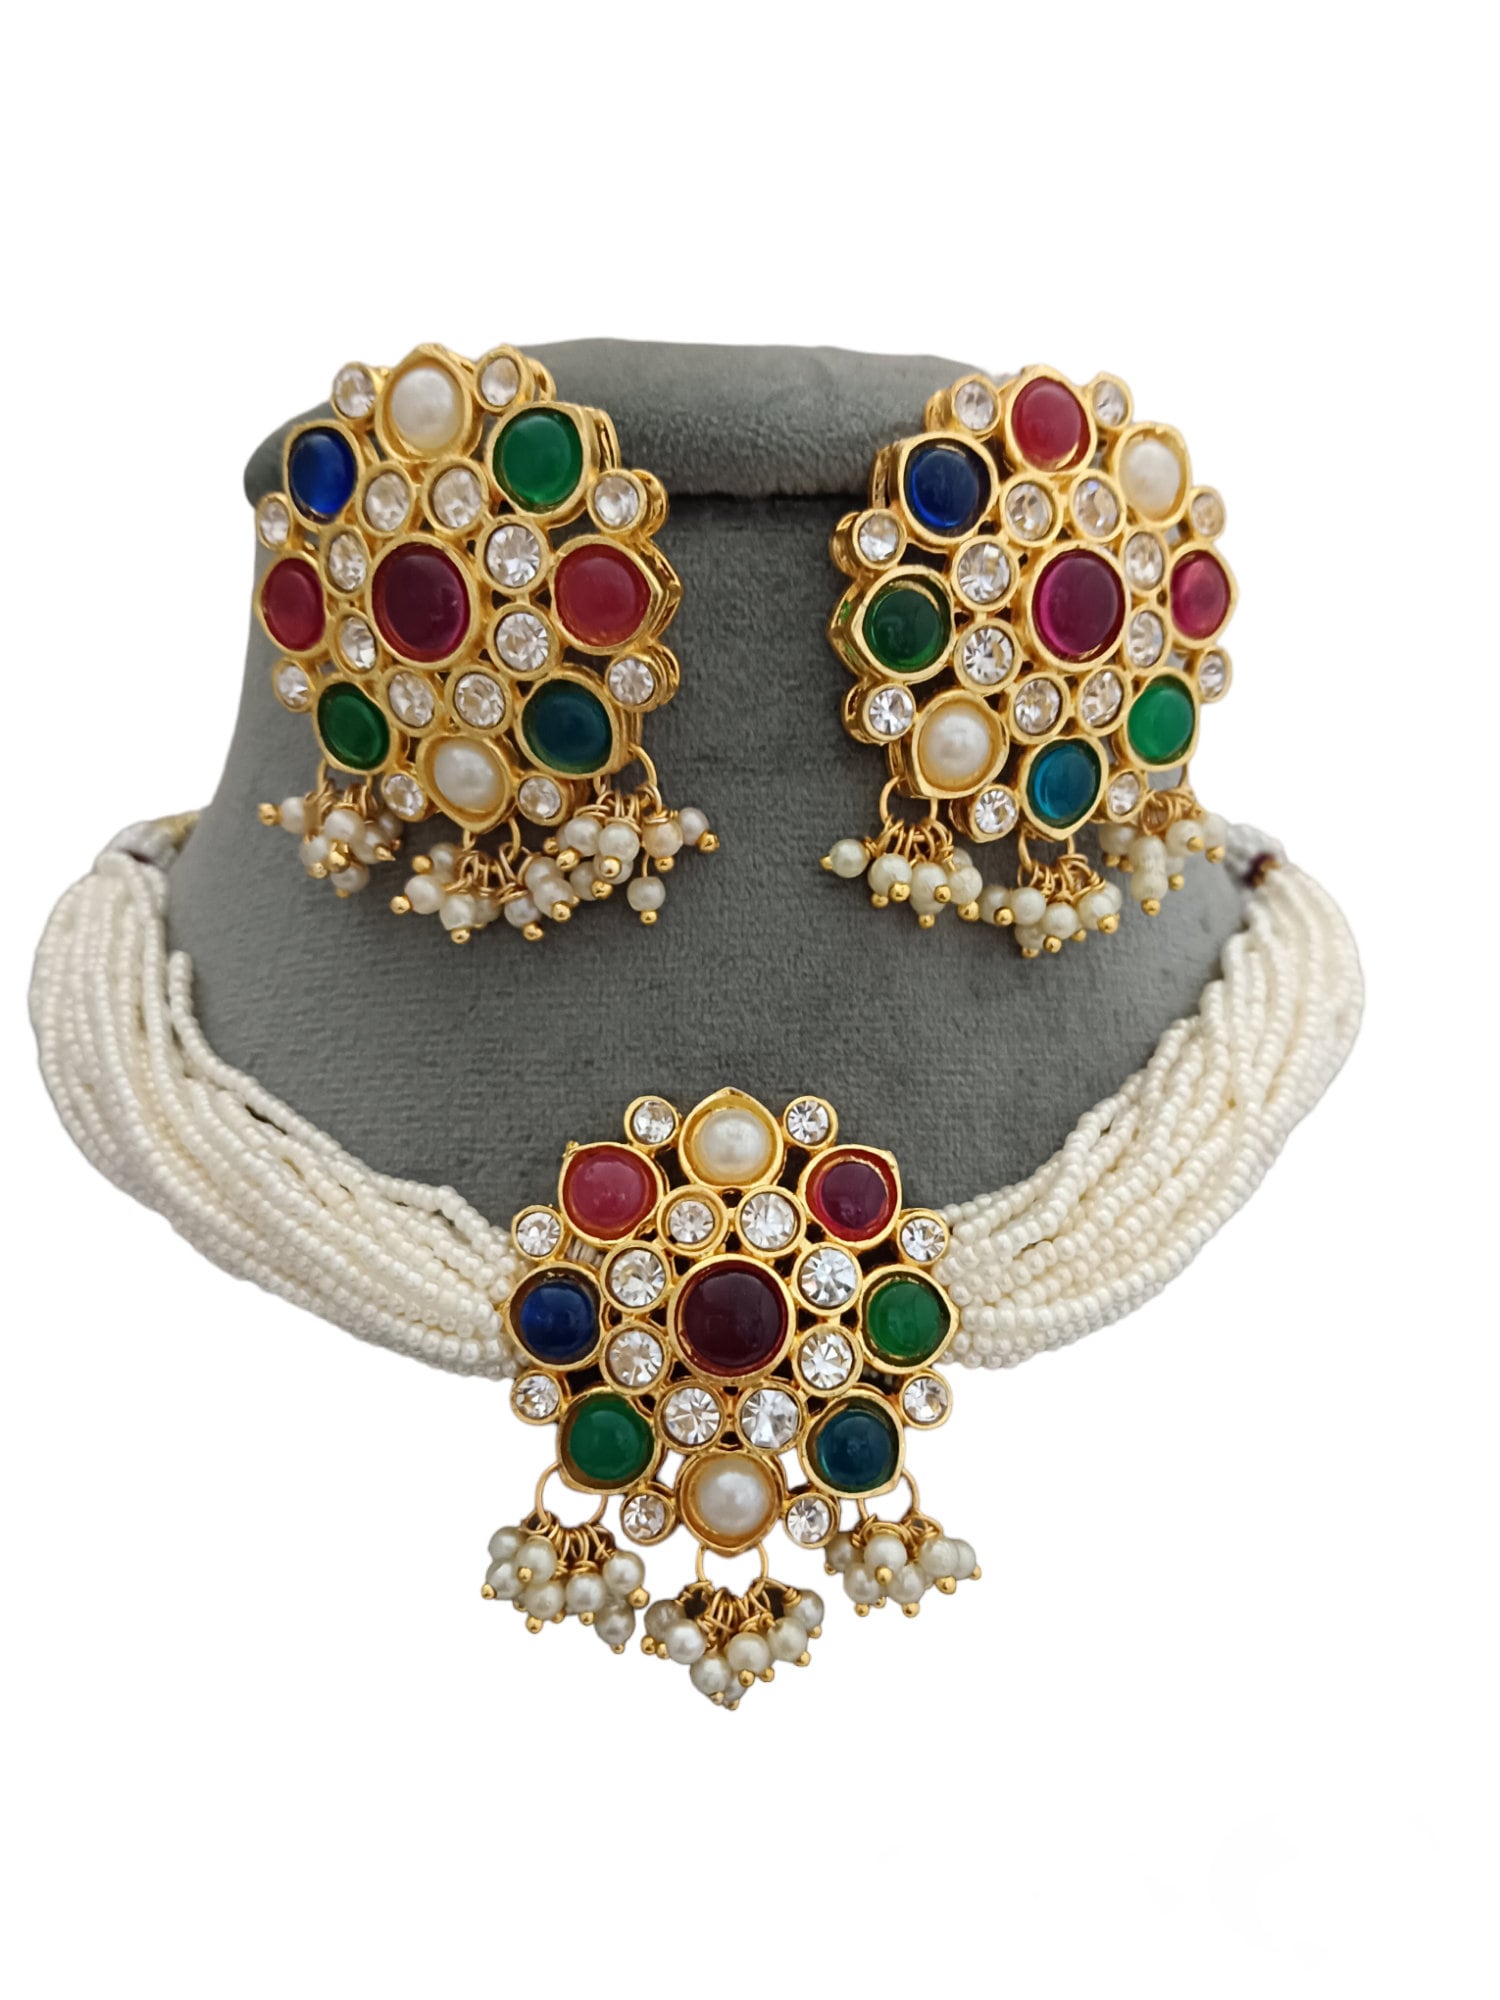 Shop Tantalizing Navaratna 22K Gold Stud Earrings Online in India | Gehna